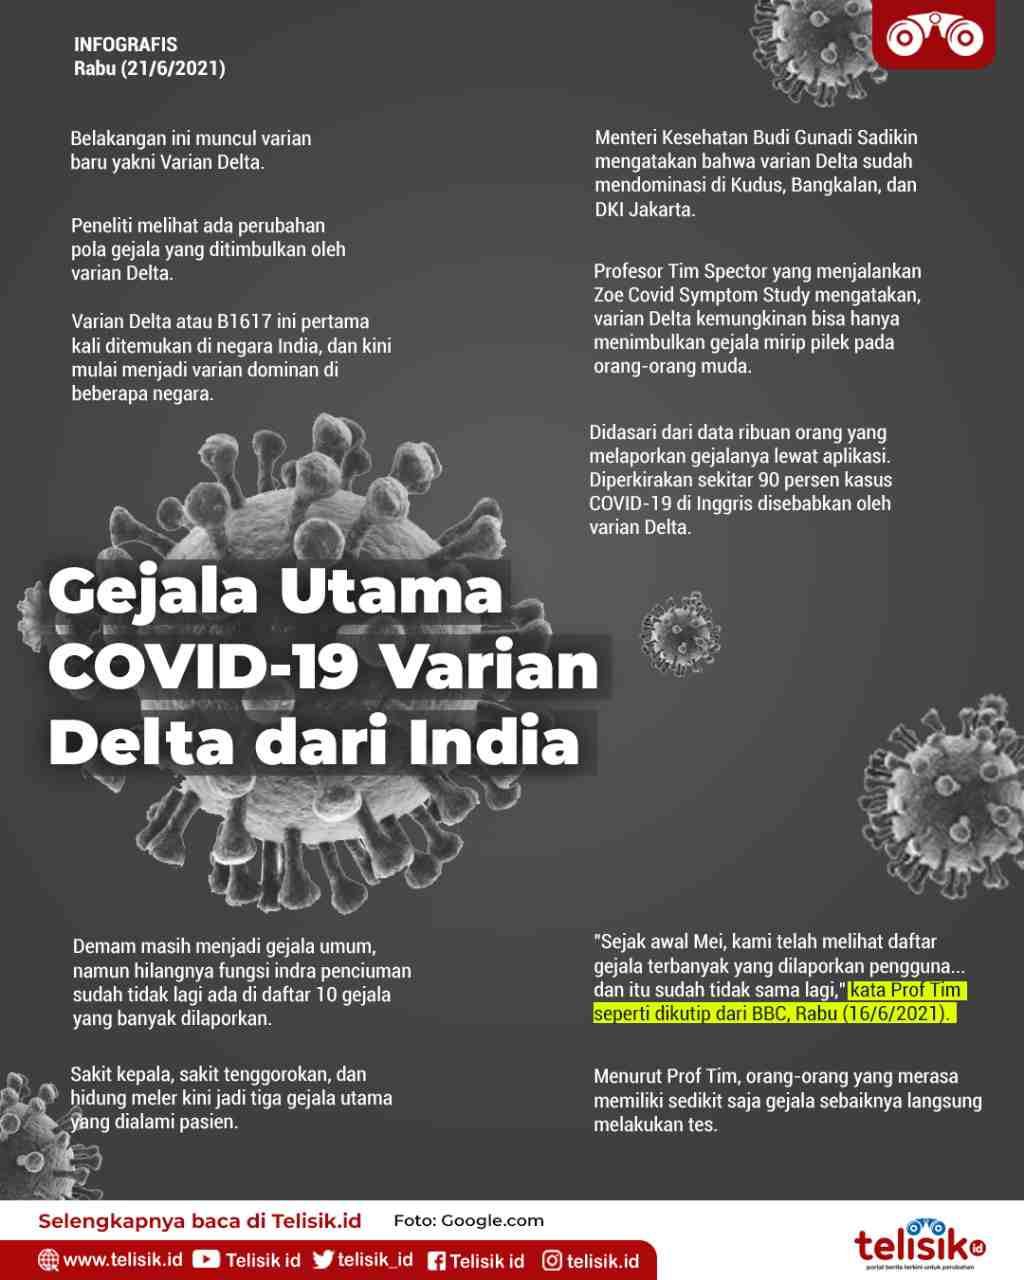 Infografis: Gejala Utama COVID-19 Varian Delta dari India